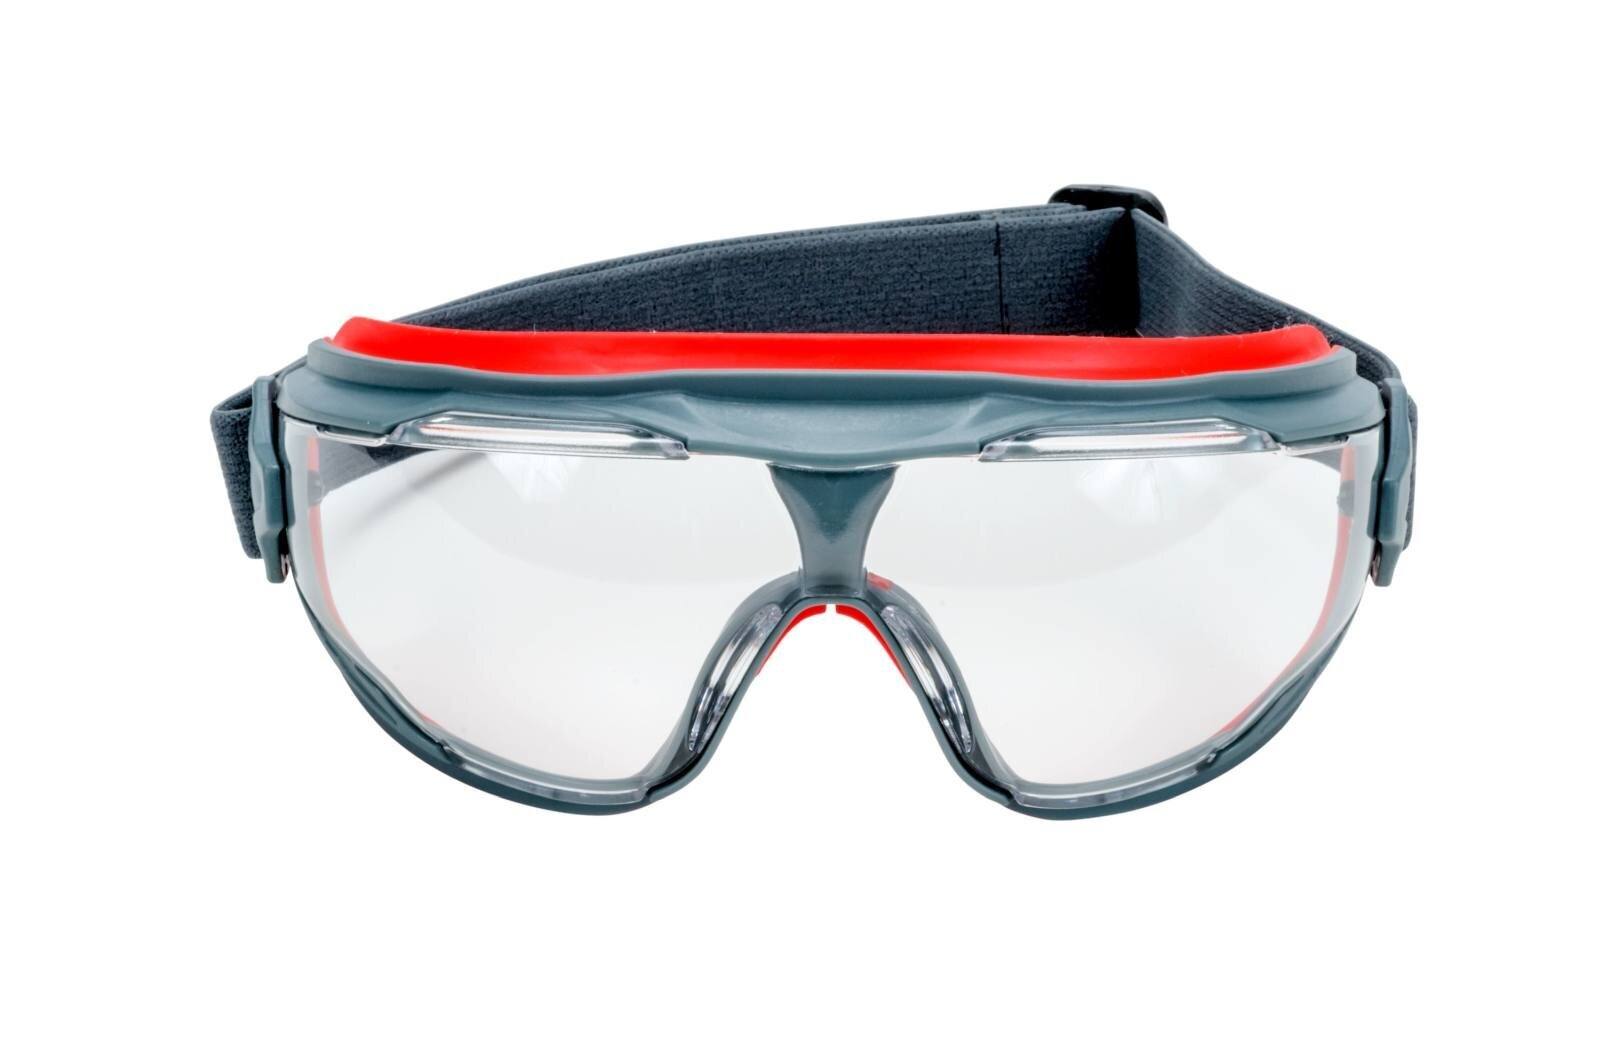 3M GoggleGear 500 full vision goggles GG501V, clear lens, Scotchgard anti-fog, UV